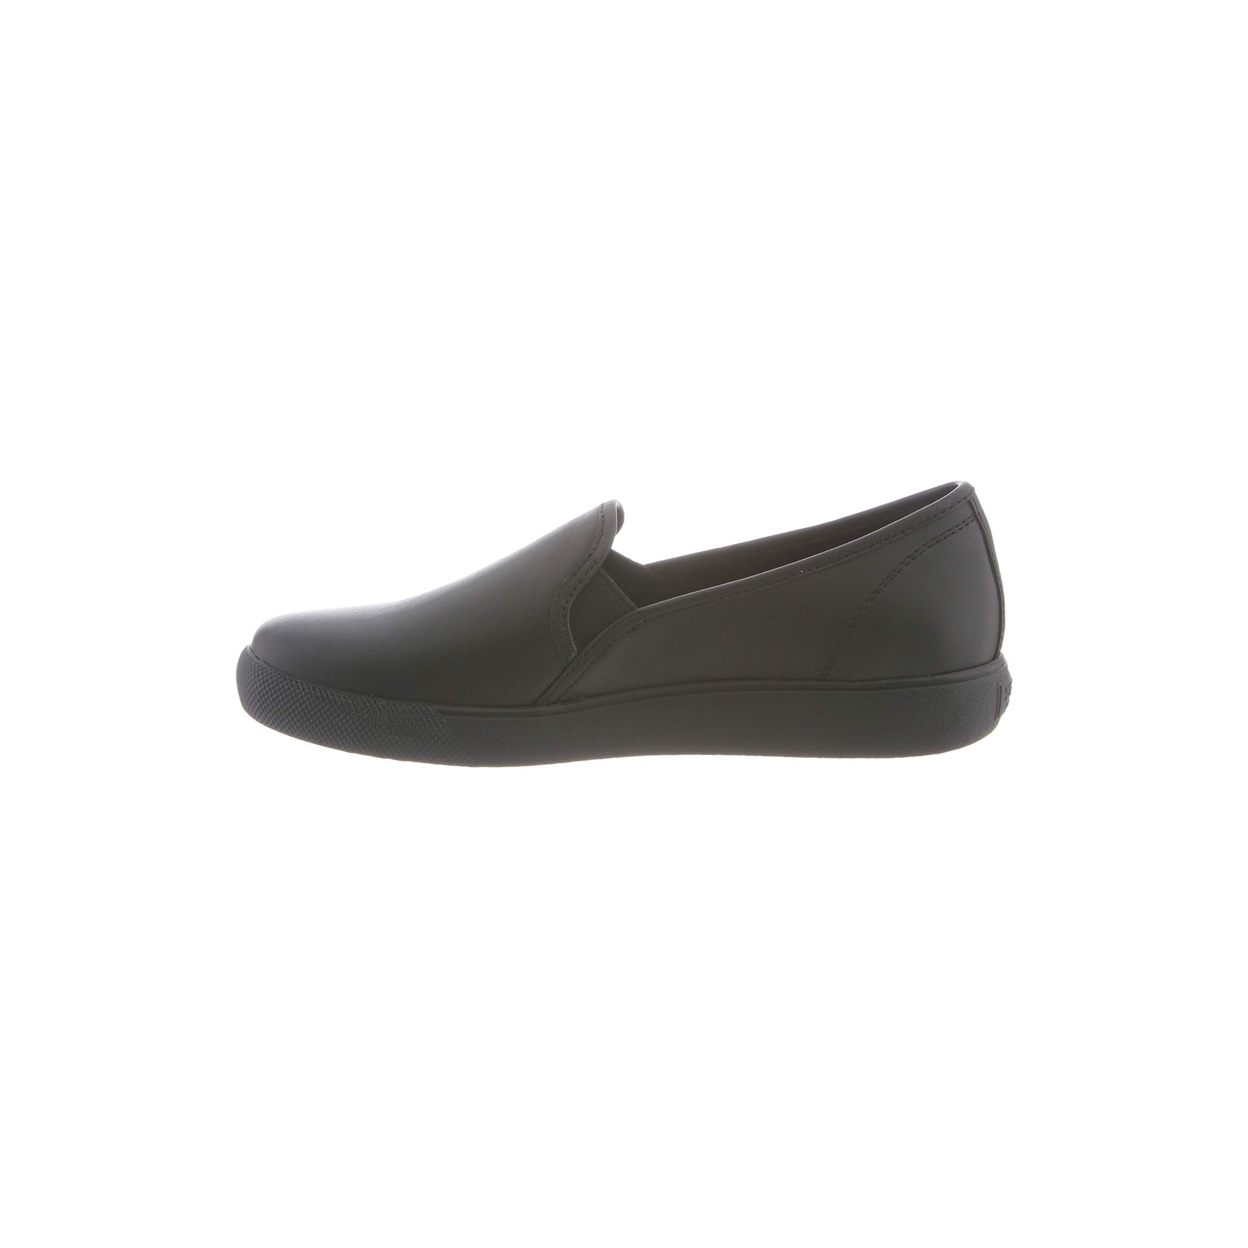 Klogs Footwear Women's Padma Shoe BLACK FULL GRAIN - BLACK FULL GRAIN, 9-M